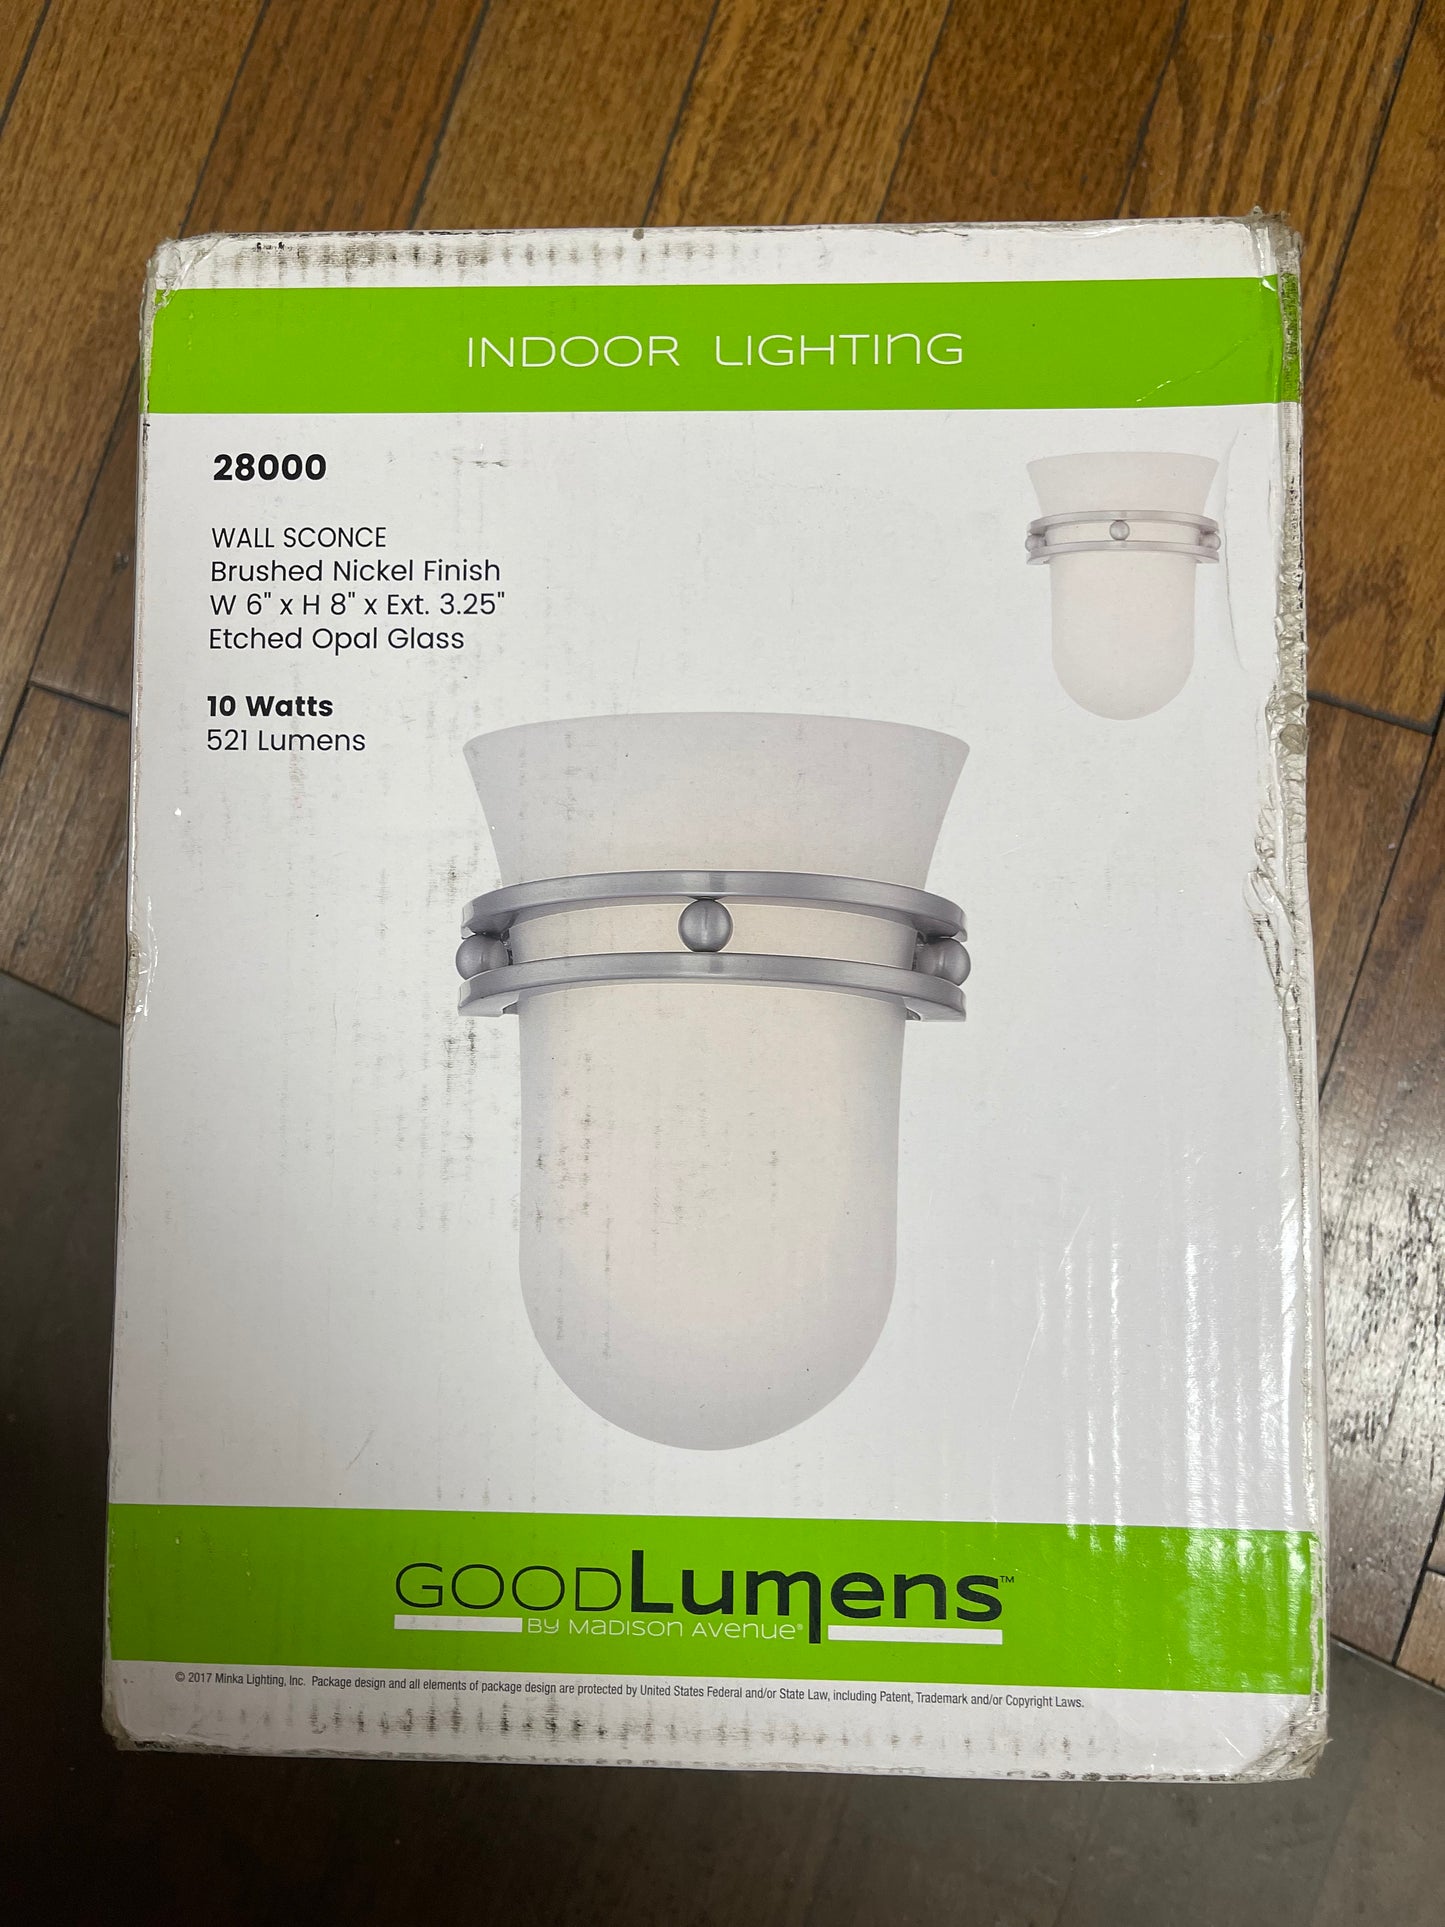 Good Lumens by Madison Avenue 28000 40-Watt Equivalence Brushed Nickel Integrated LED Sconce Damaged Box